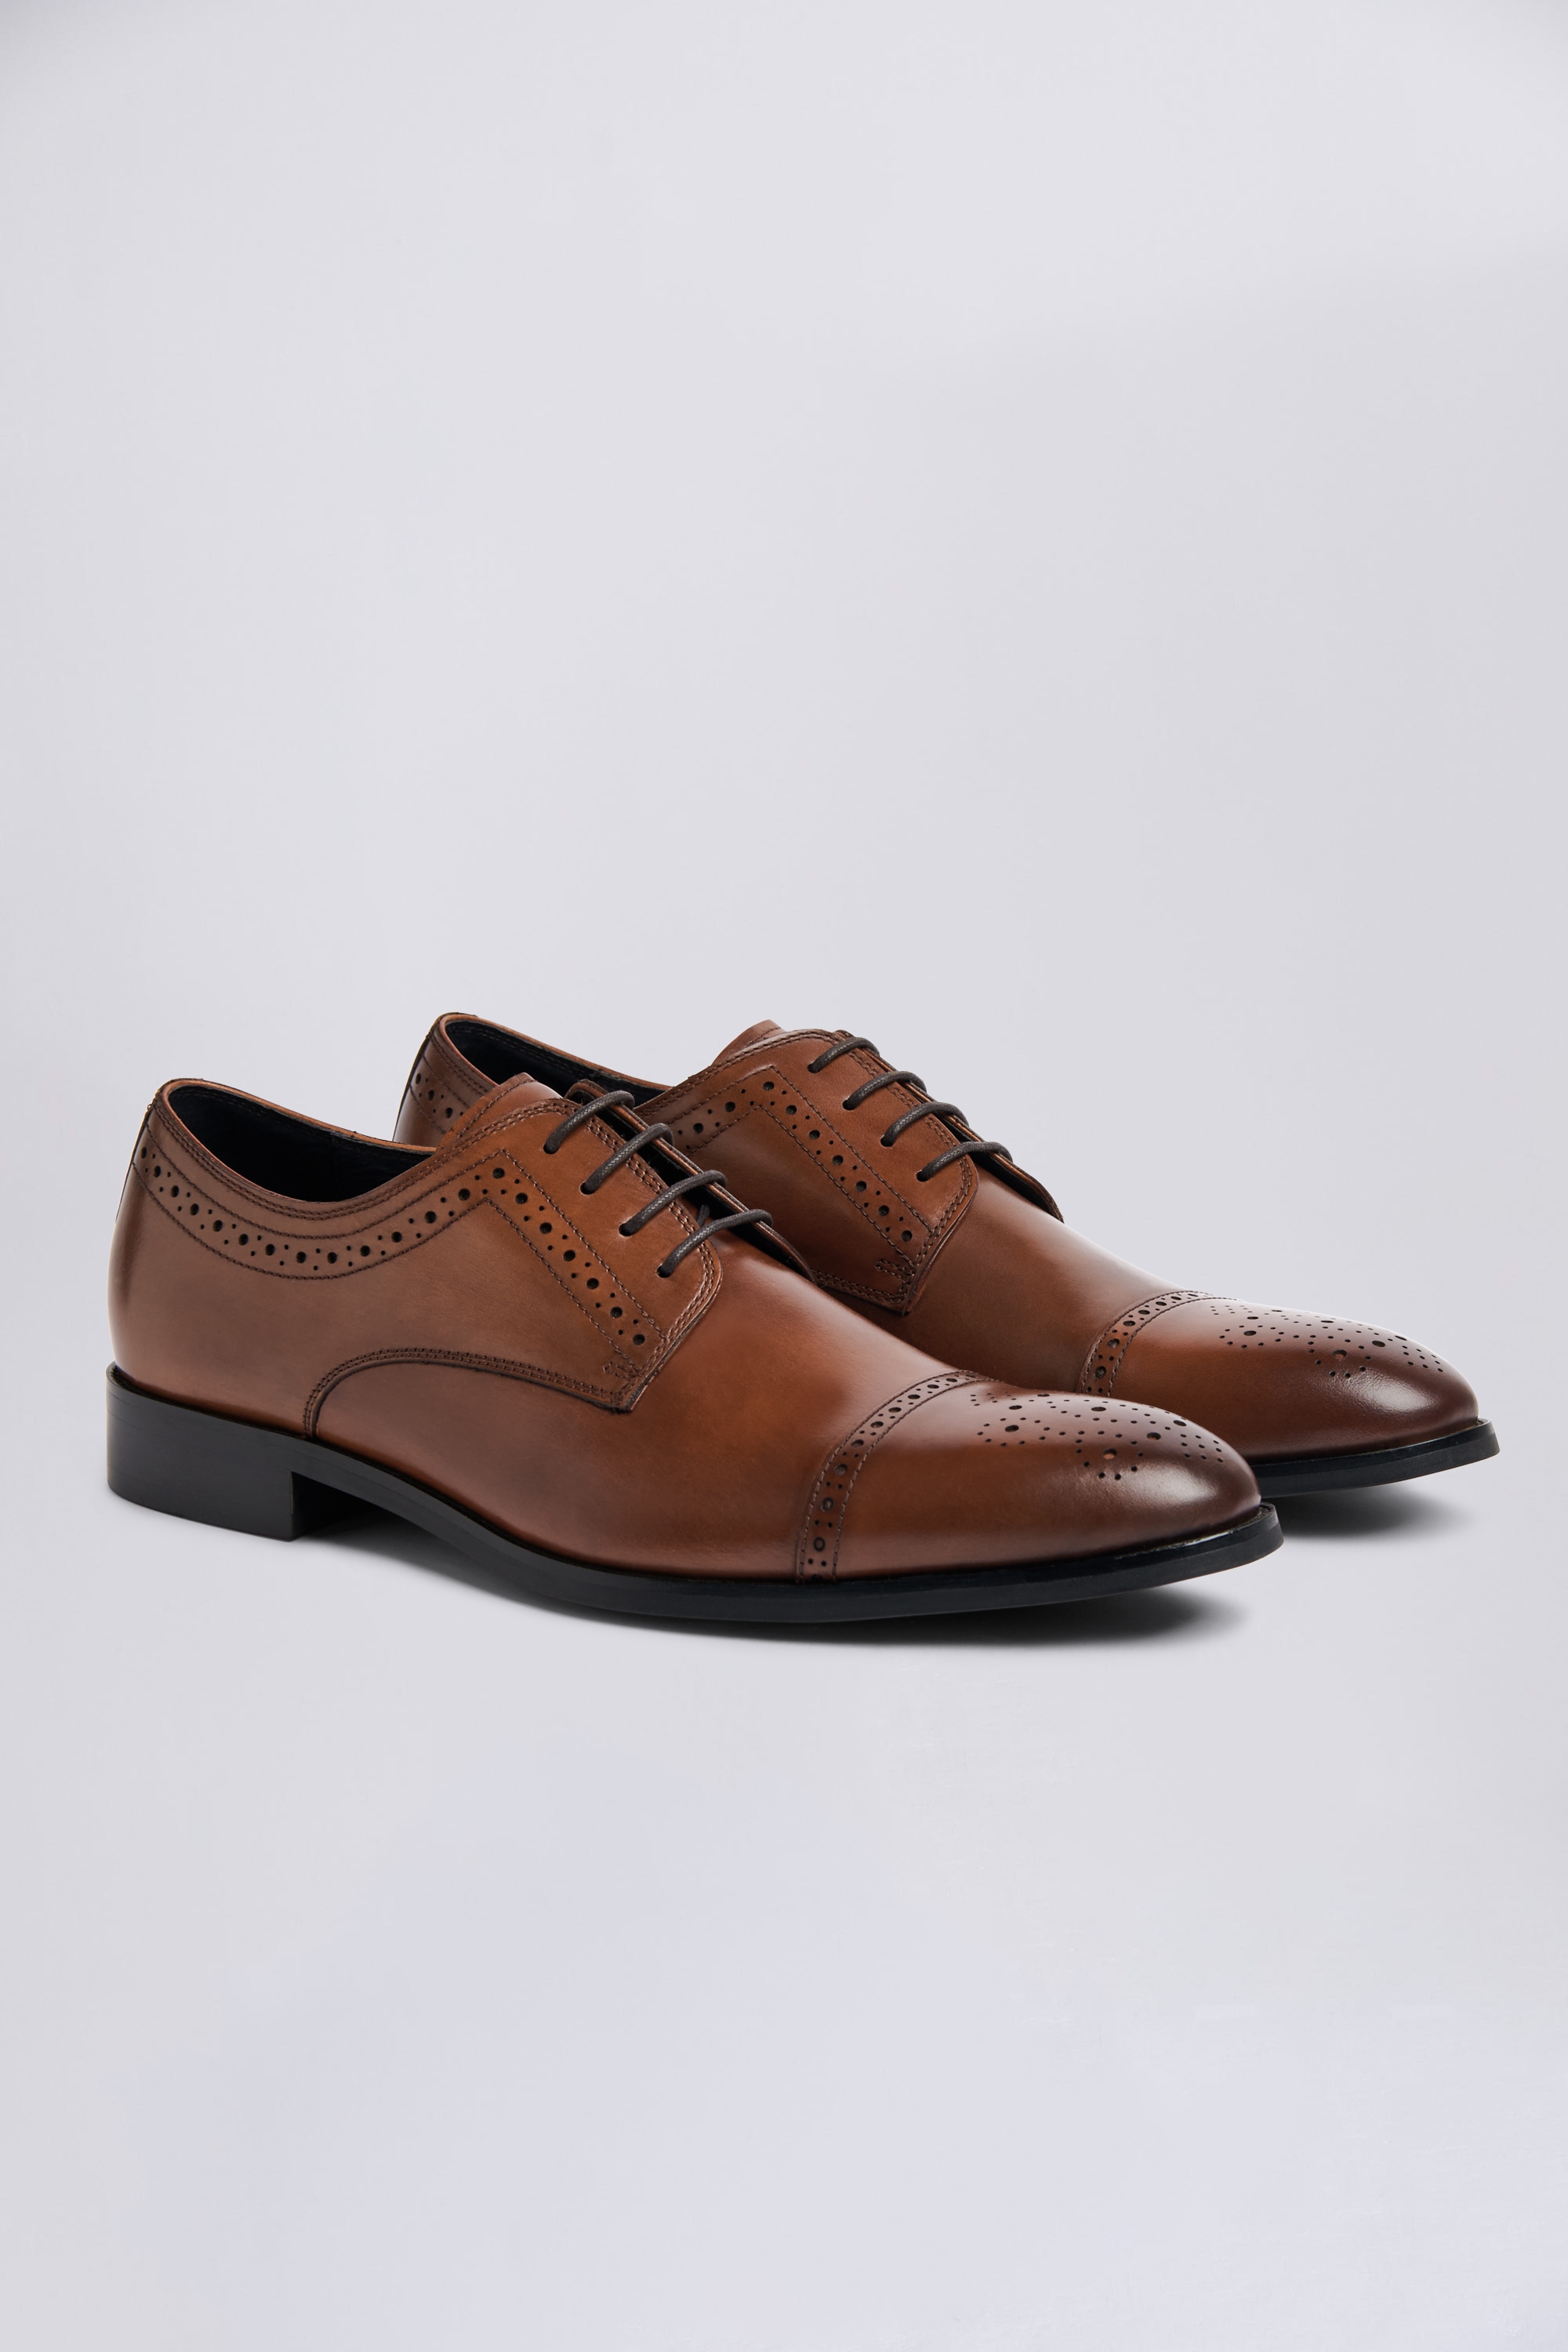 John White Lucan Tan Brogue Shoes | Buy Online at Moss